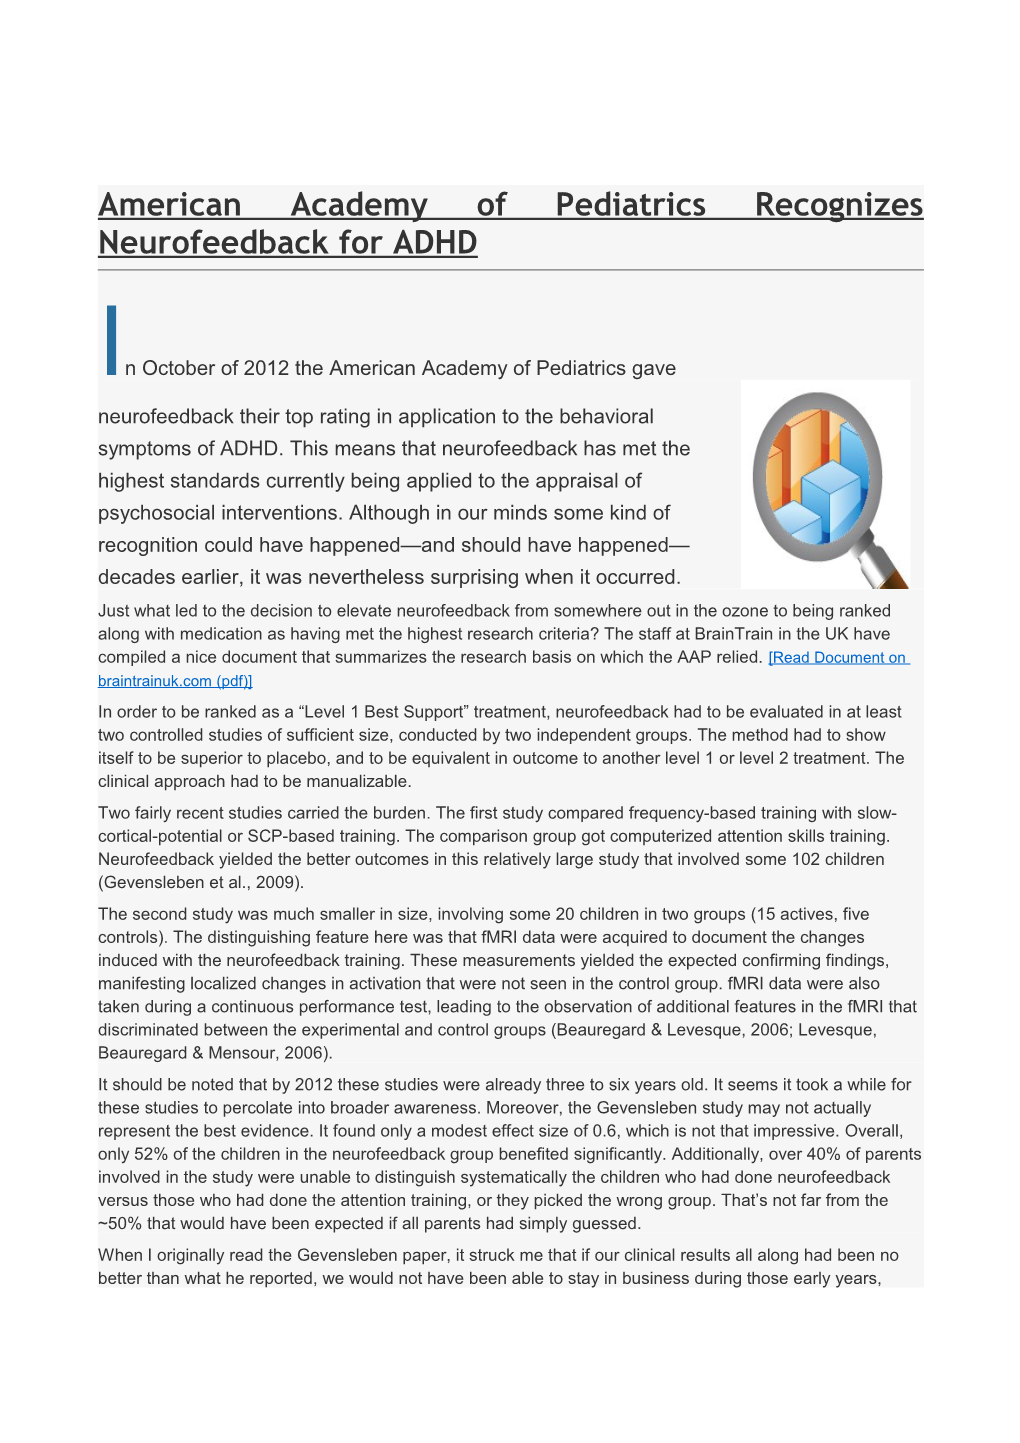 American Academy of Pediatrics Recognizes Neurofeedback for ADHD